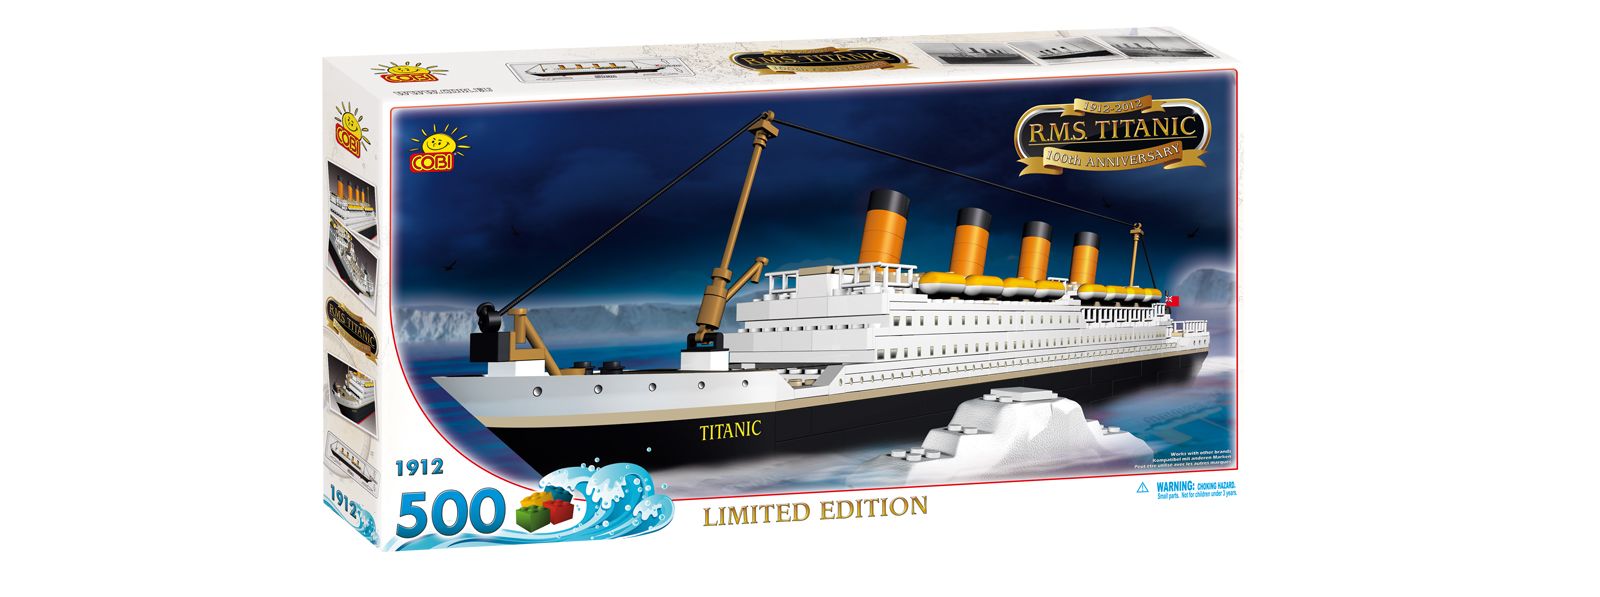 Limited Titanic Edition